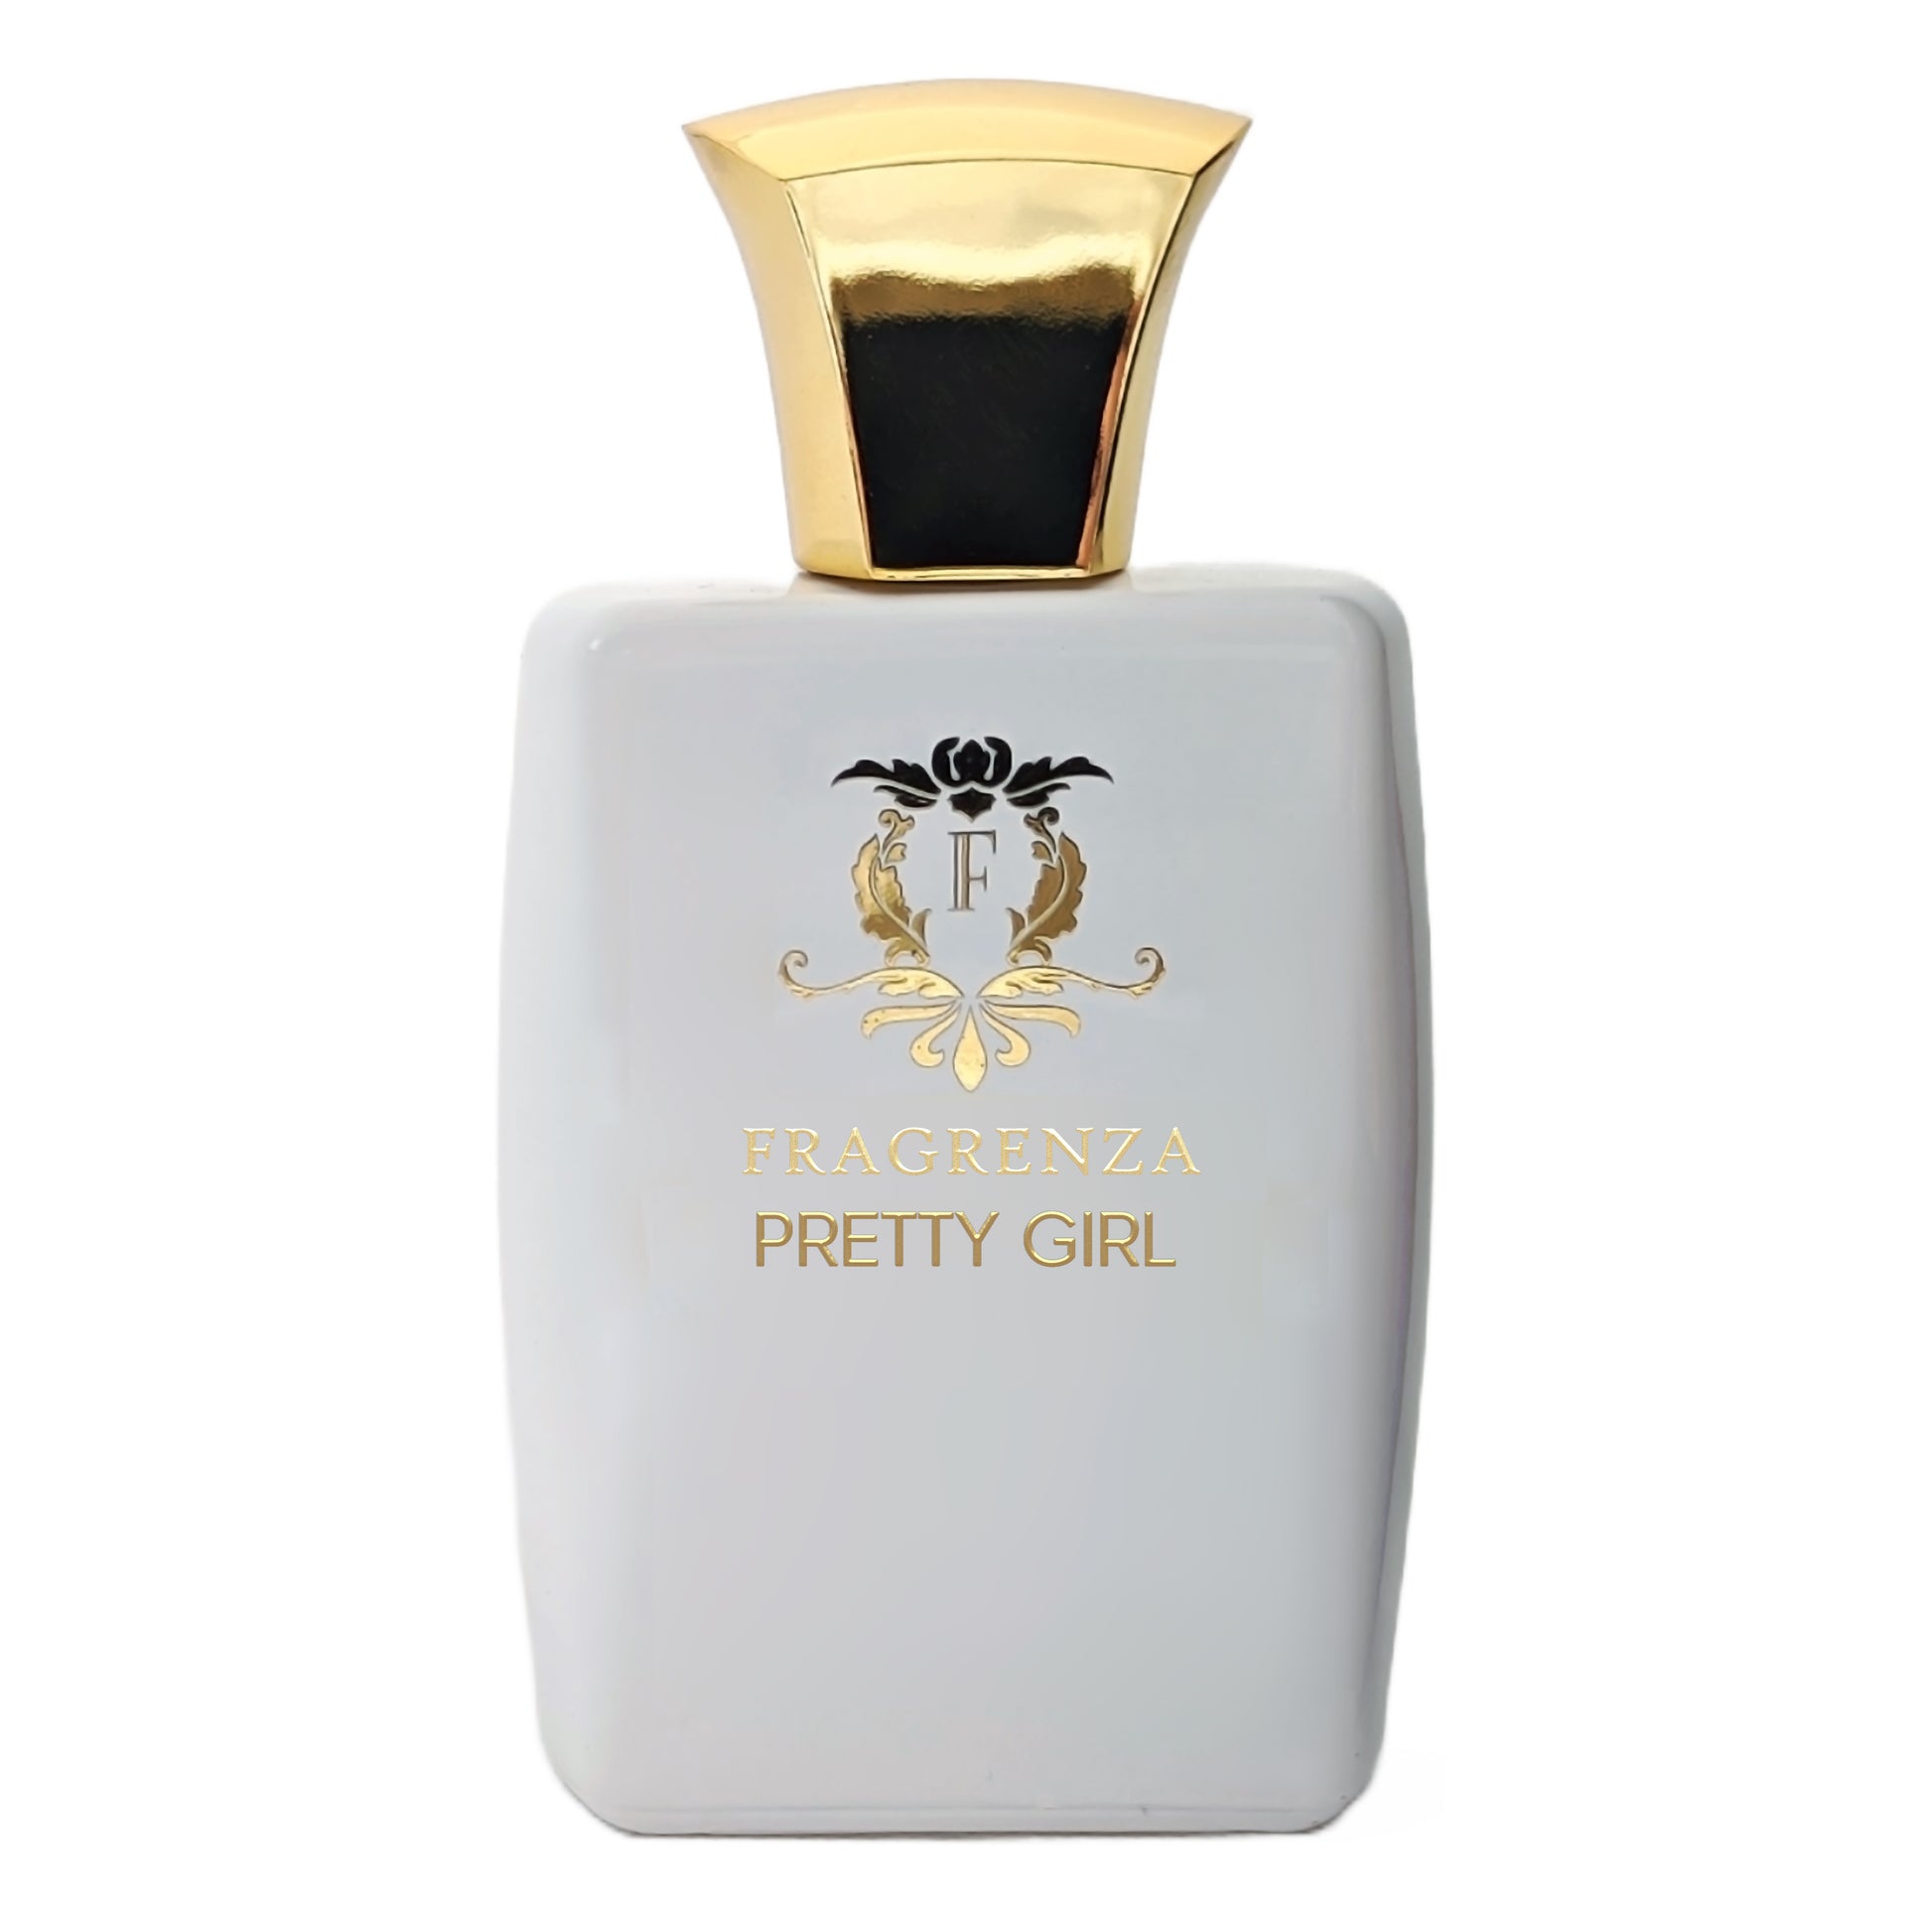 Good Girl Suprême Carolina Herrera perfume - a fragrance for women